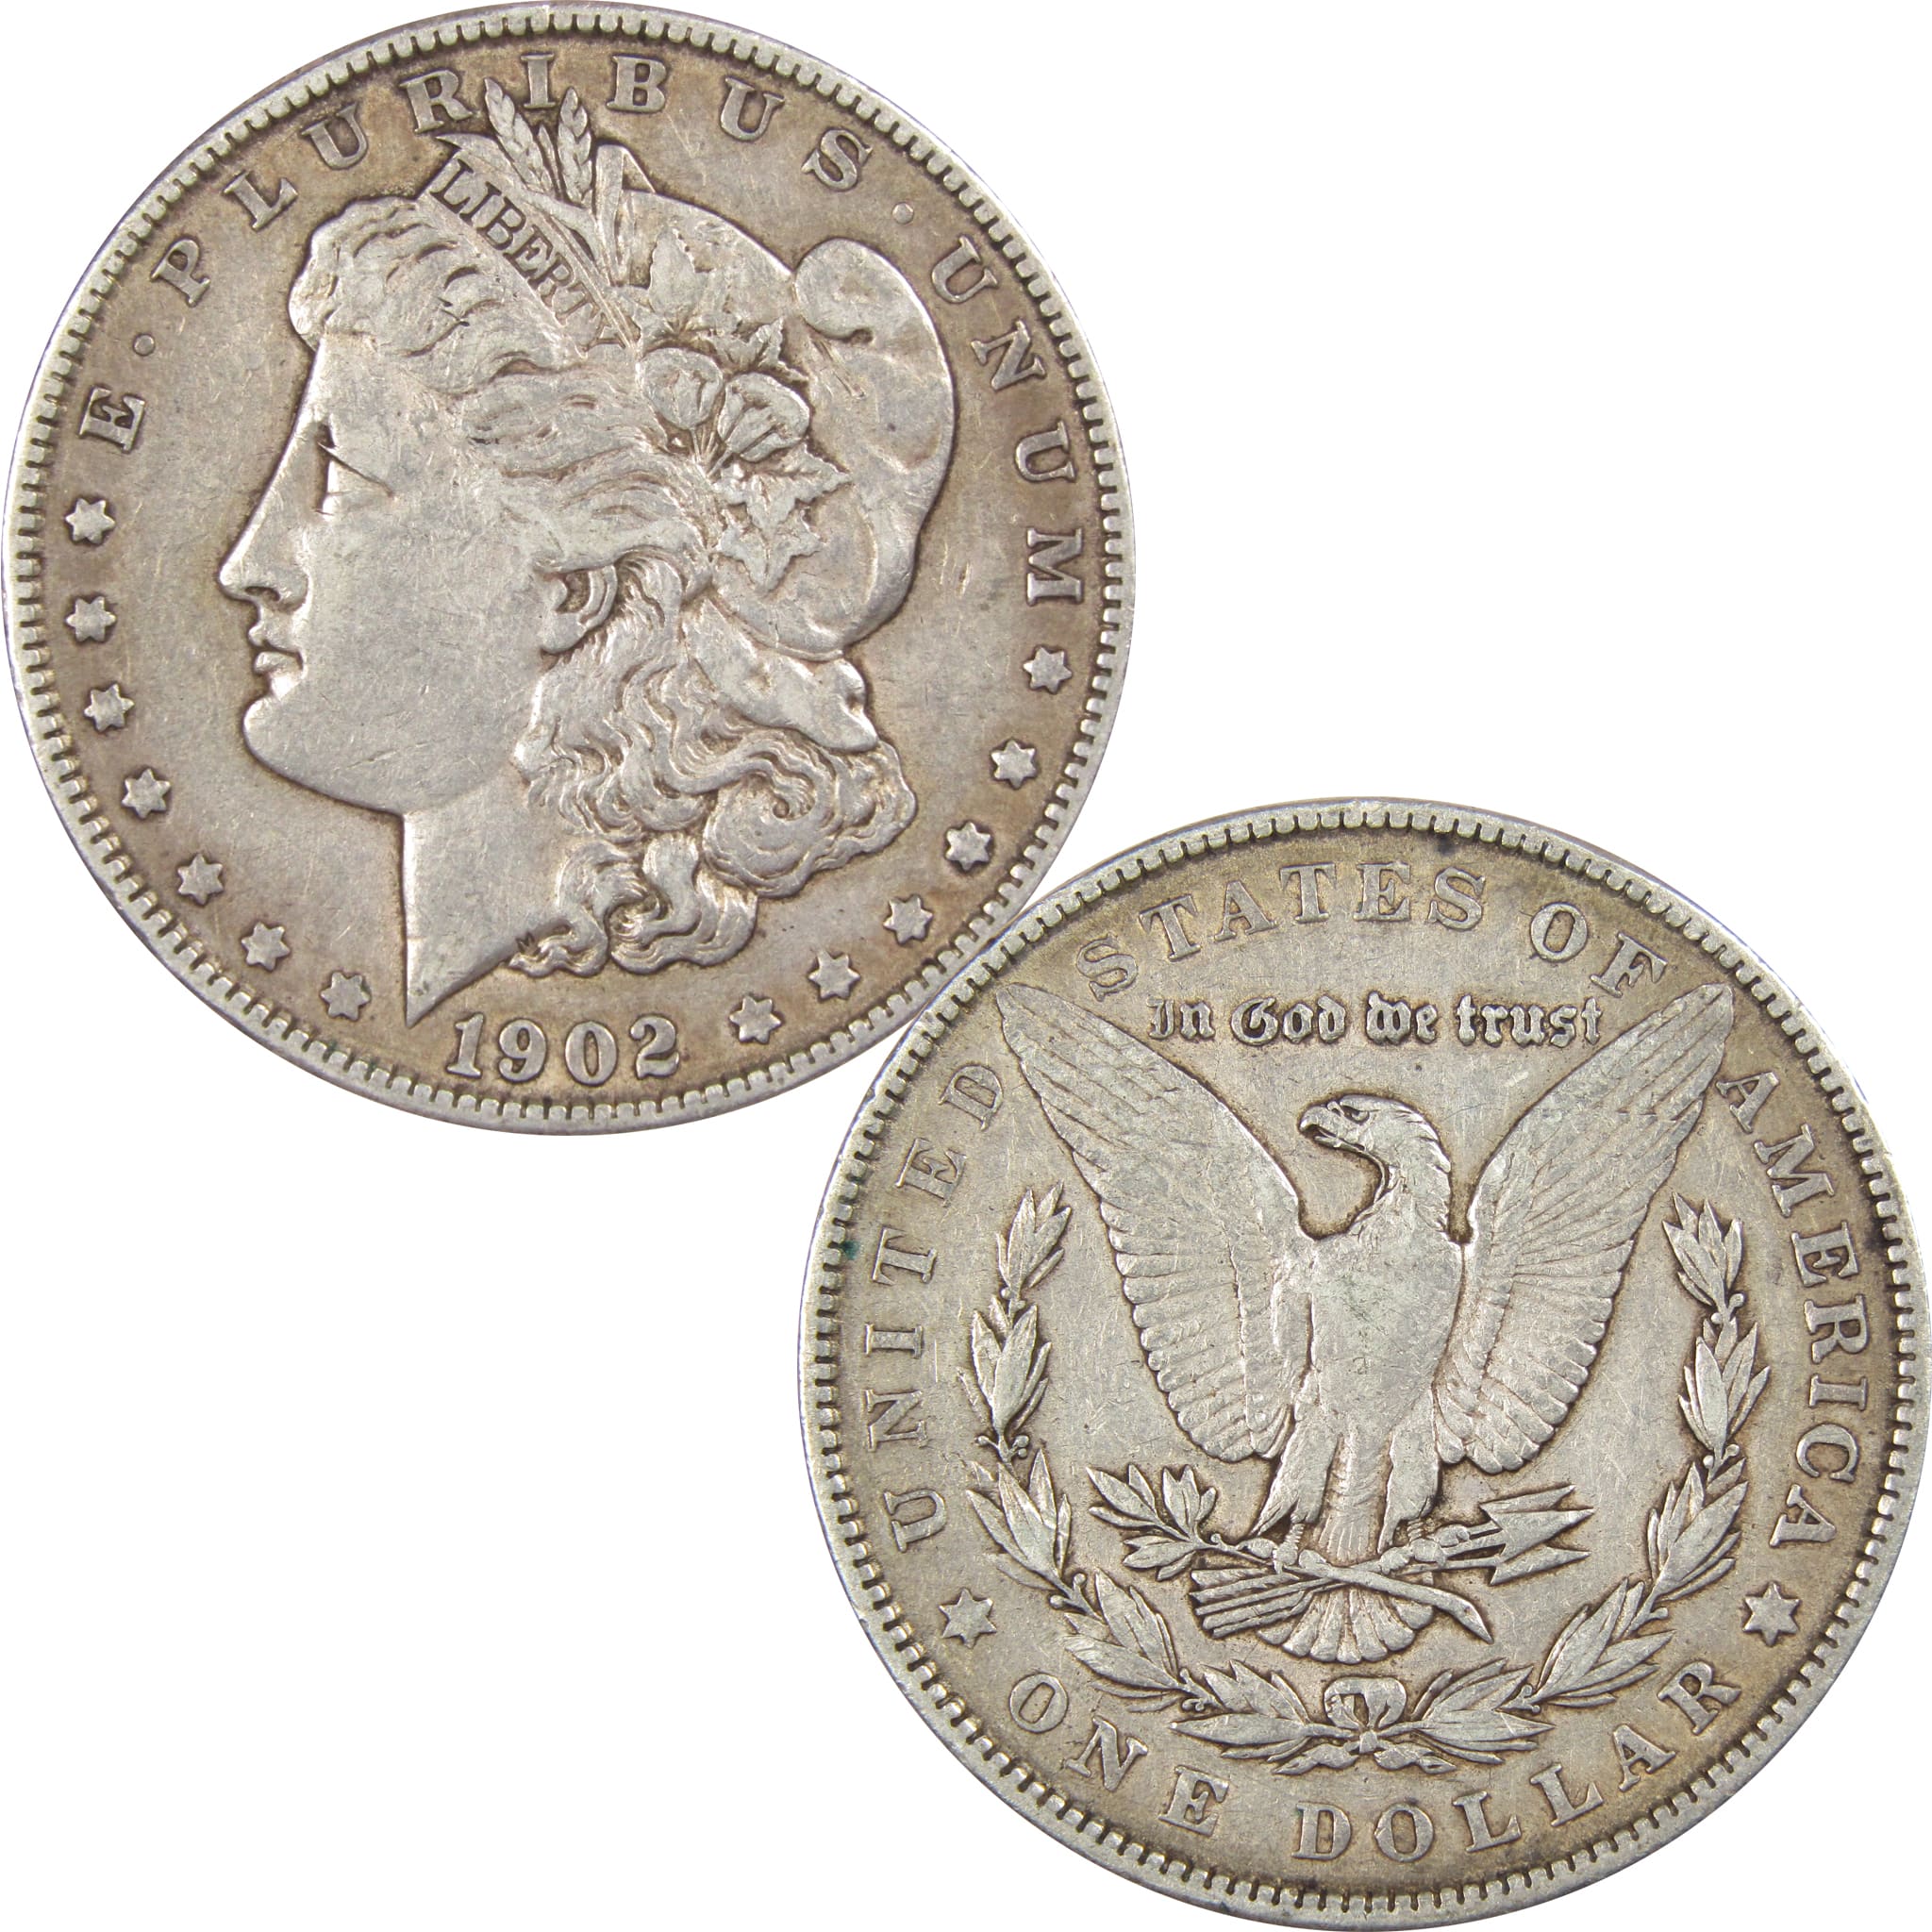 1902 Morgan Dollar VF Very Fine 90% Silver US Coin SKU:IPC7474 - Morgan coin - Morgan silver dollar - Morgan silver dollar for sale - Profile Coins &amp; Collectibles